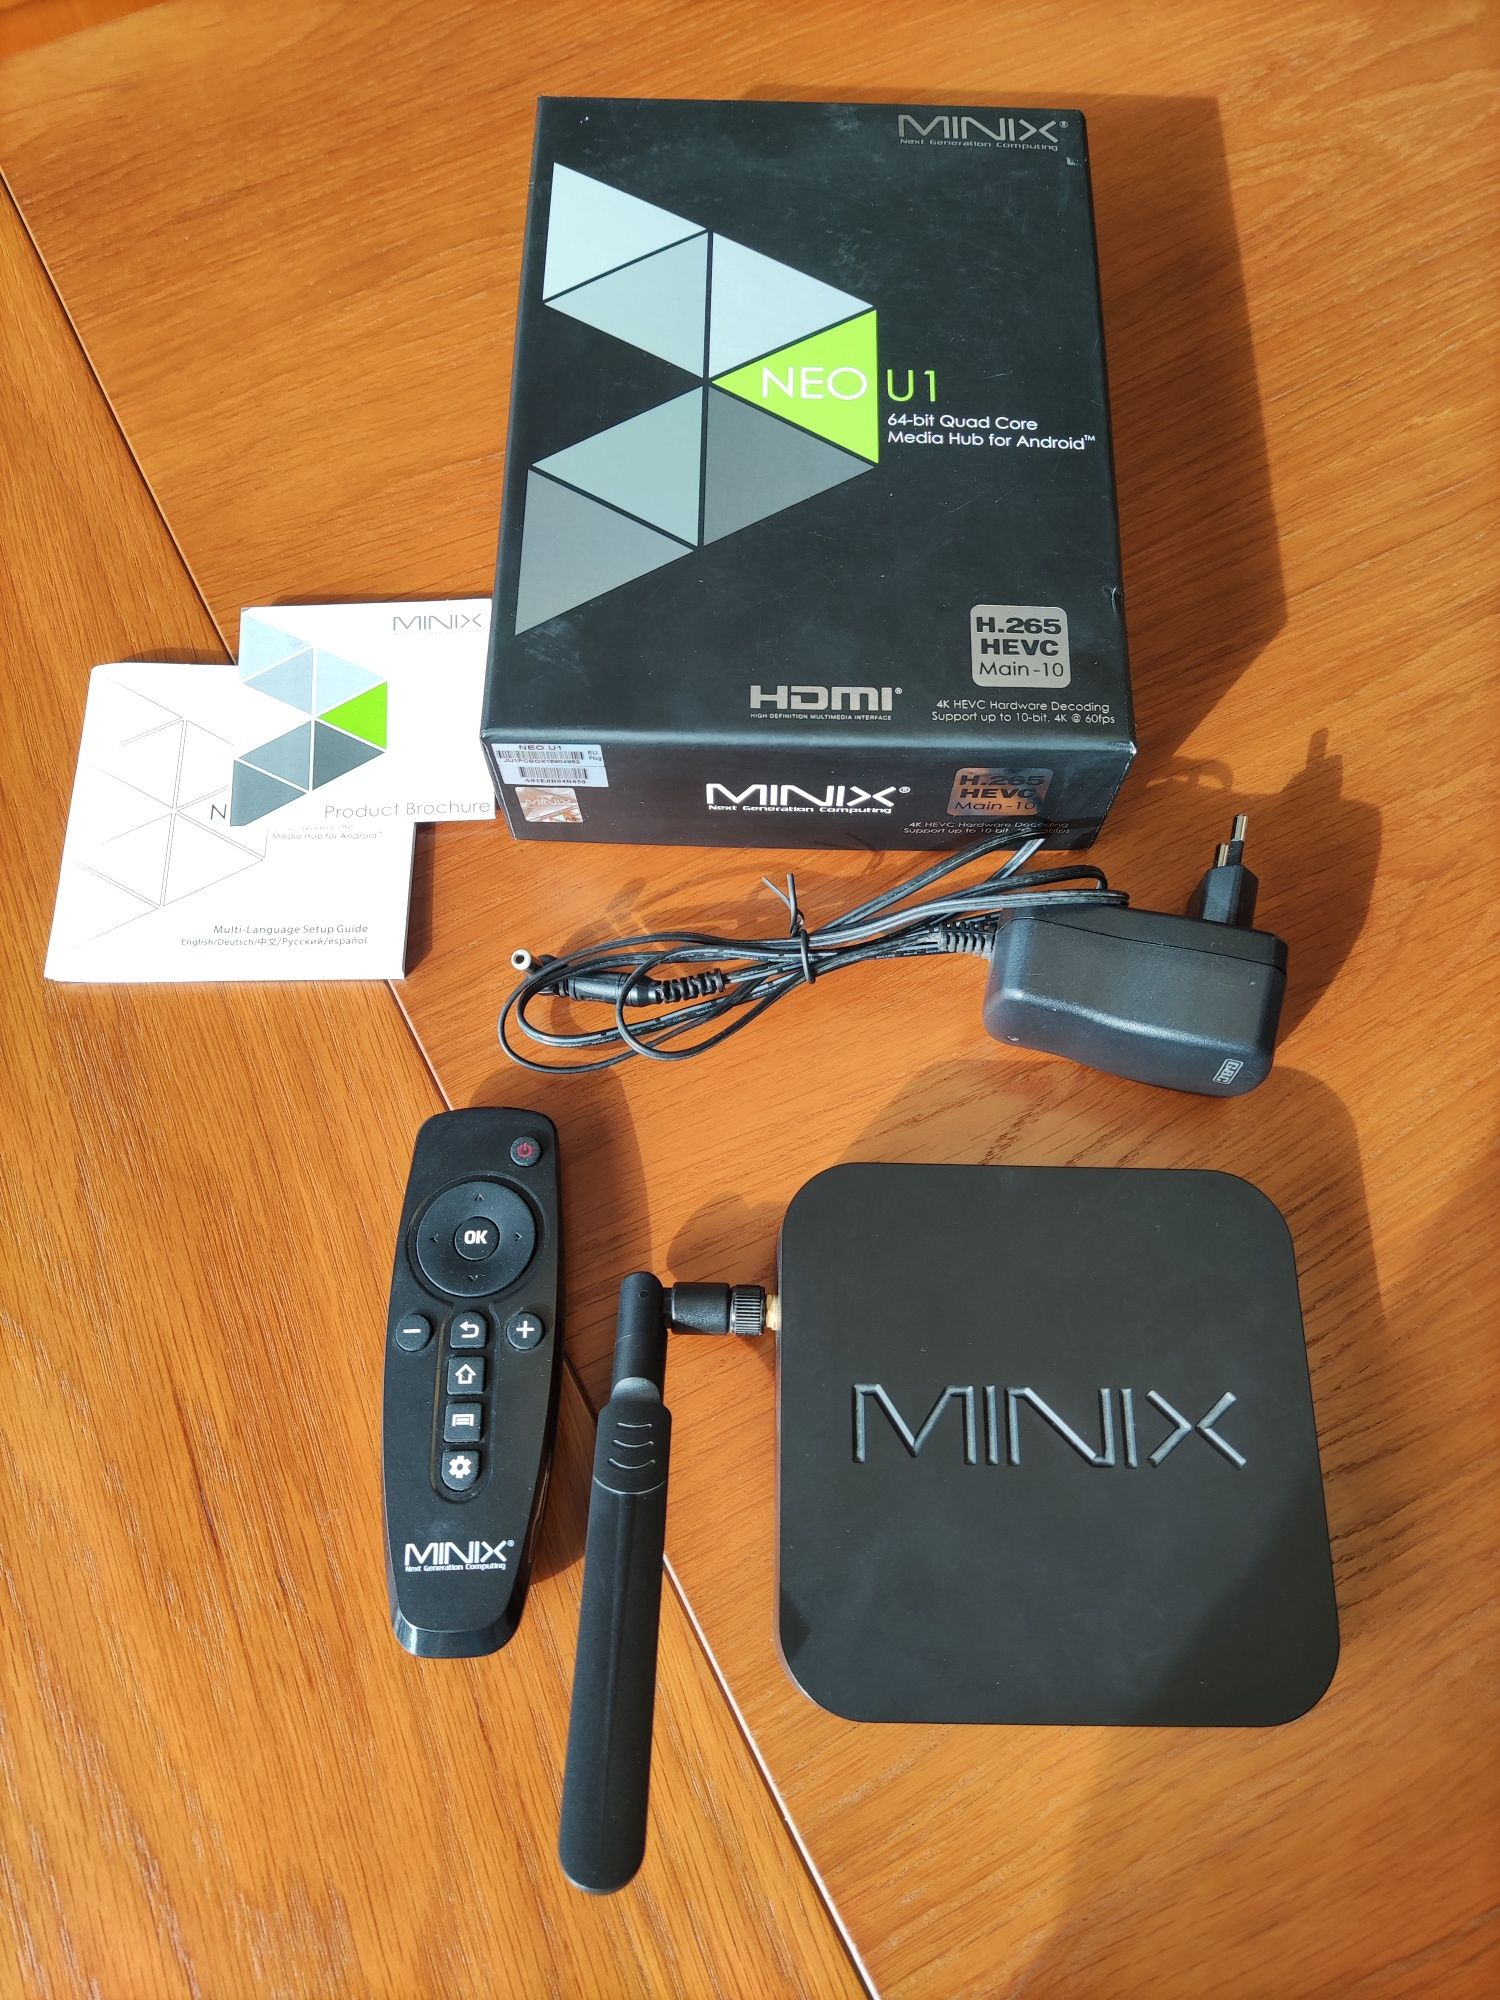 Minix NEO U1 - Android TV Box